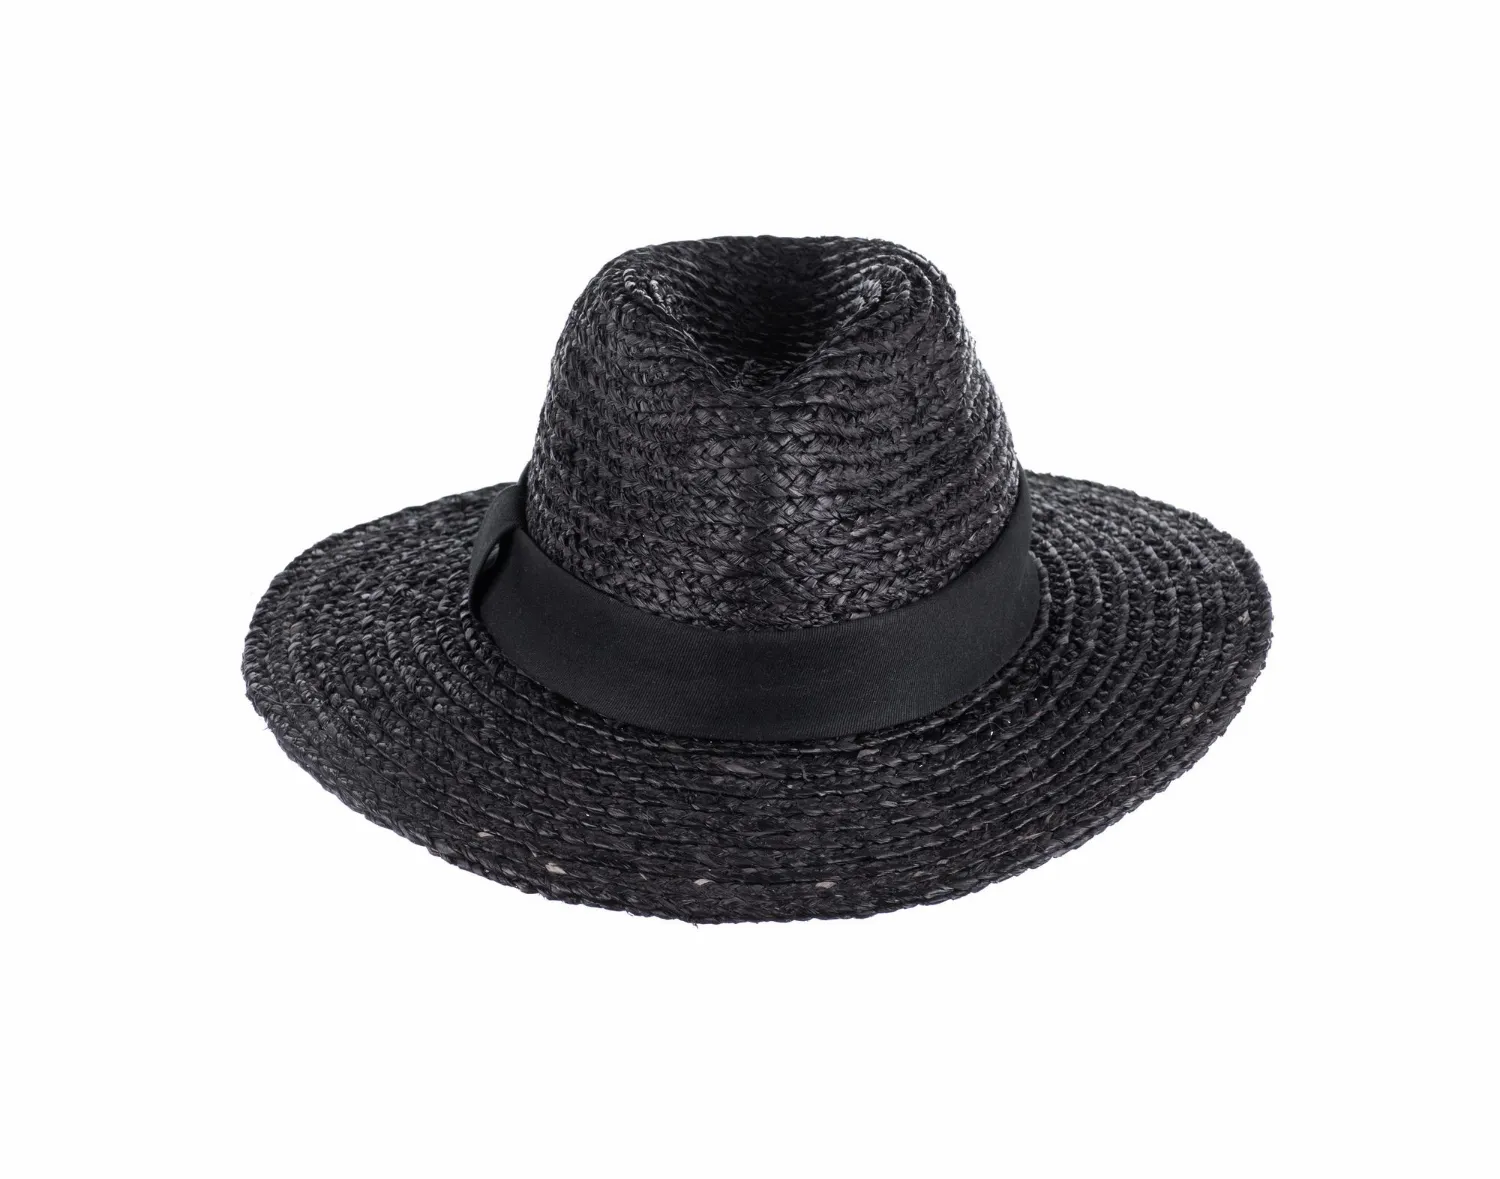 Black straw hat isolated on white background